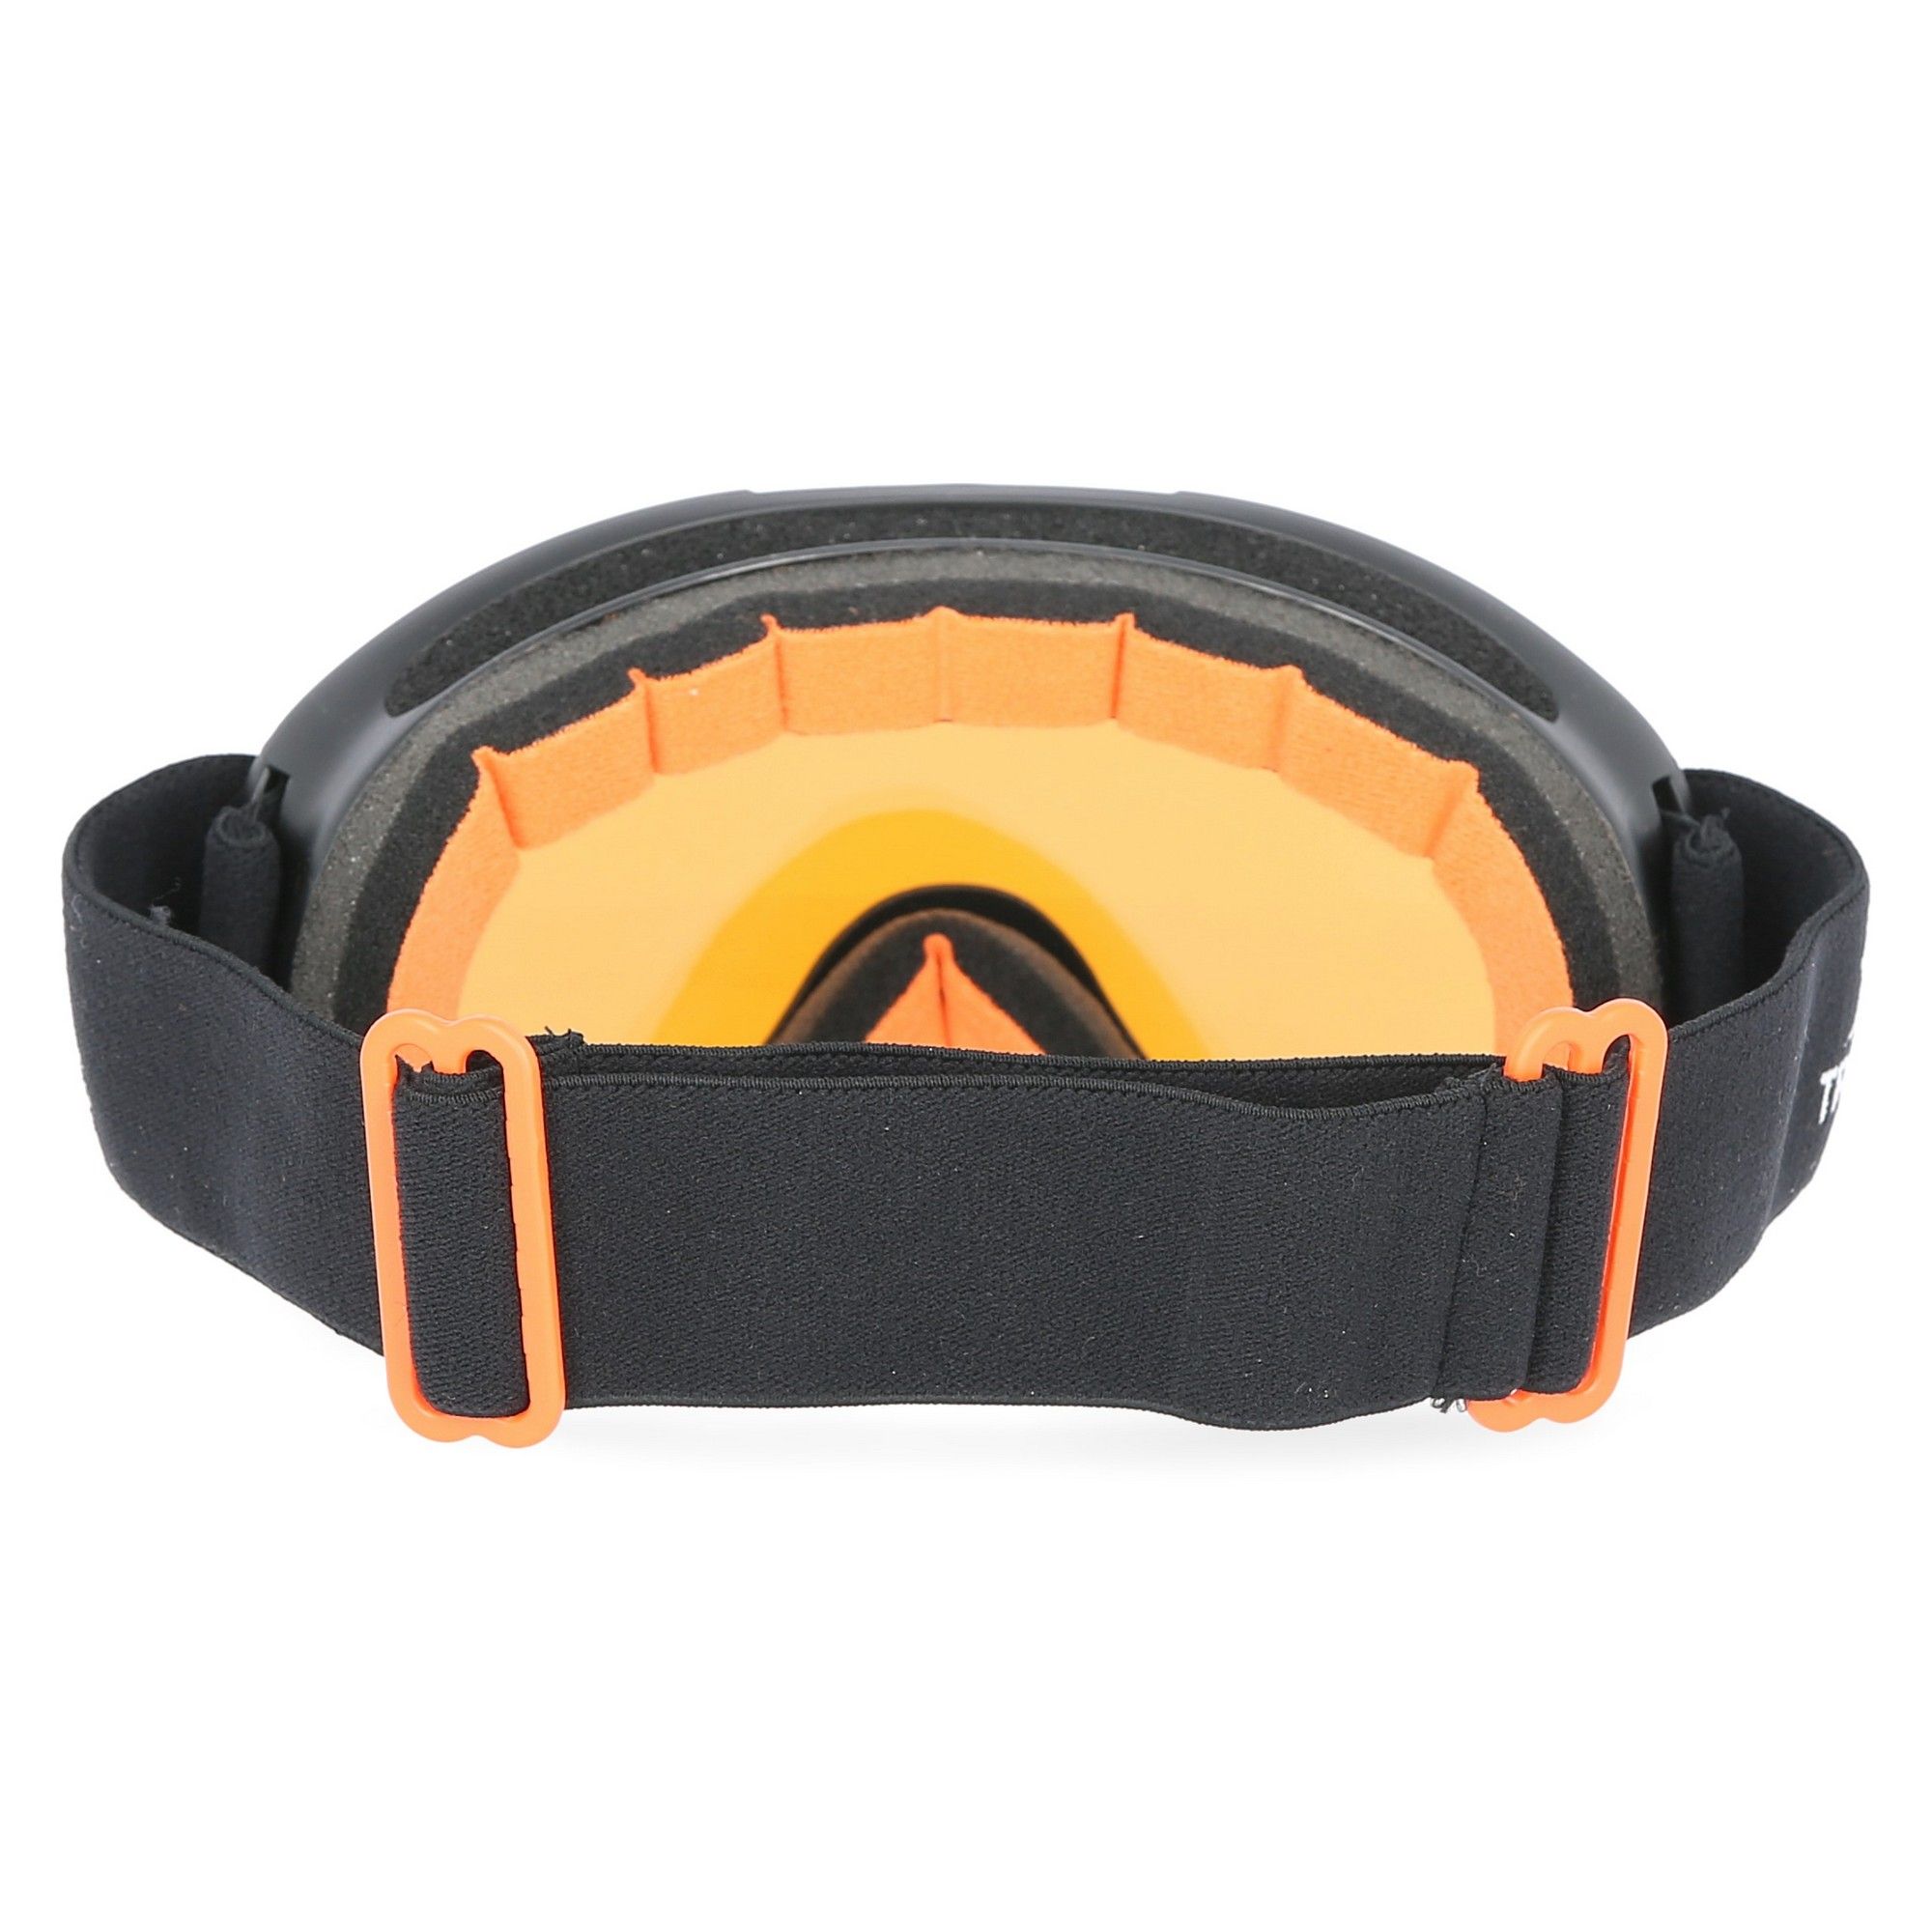 Orange dual spherical lens. UV 400nm protection. Antifog coating and strategic ventilation. 3 layer face fitting foam. Adjustable headband.